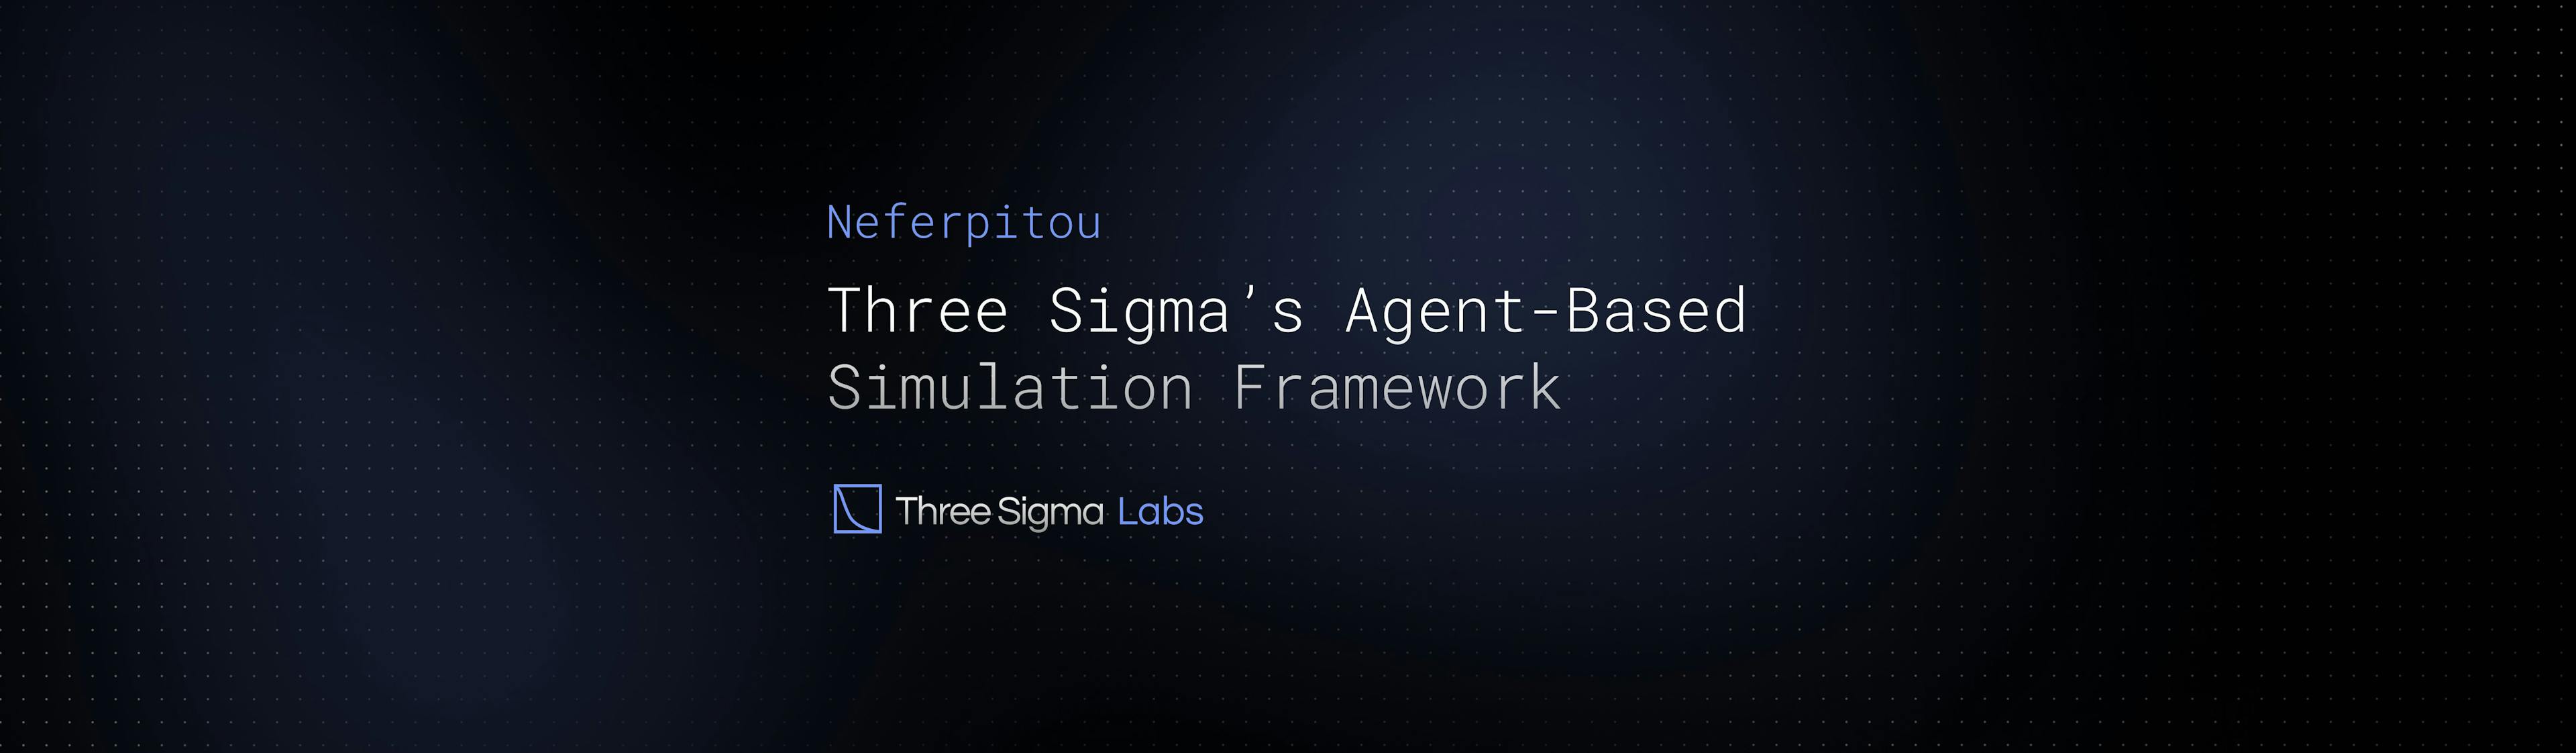 Cover Image for Neferpitou: Three Sigma’s Agent-Based Simulation Framework